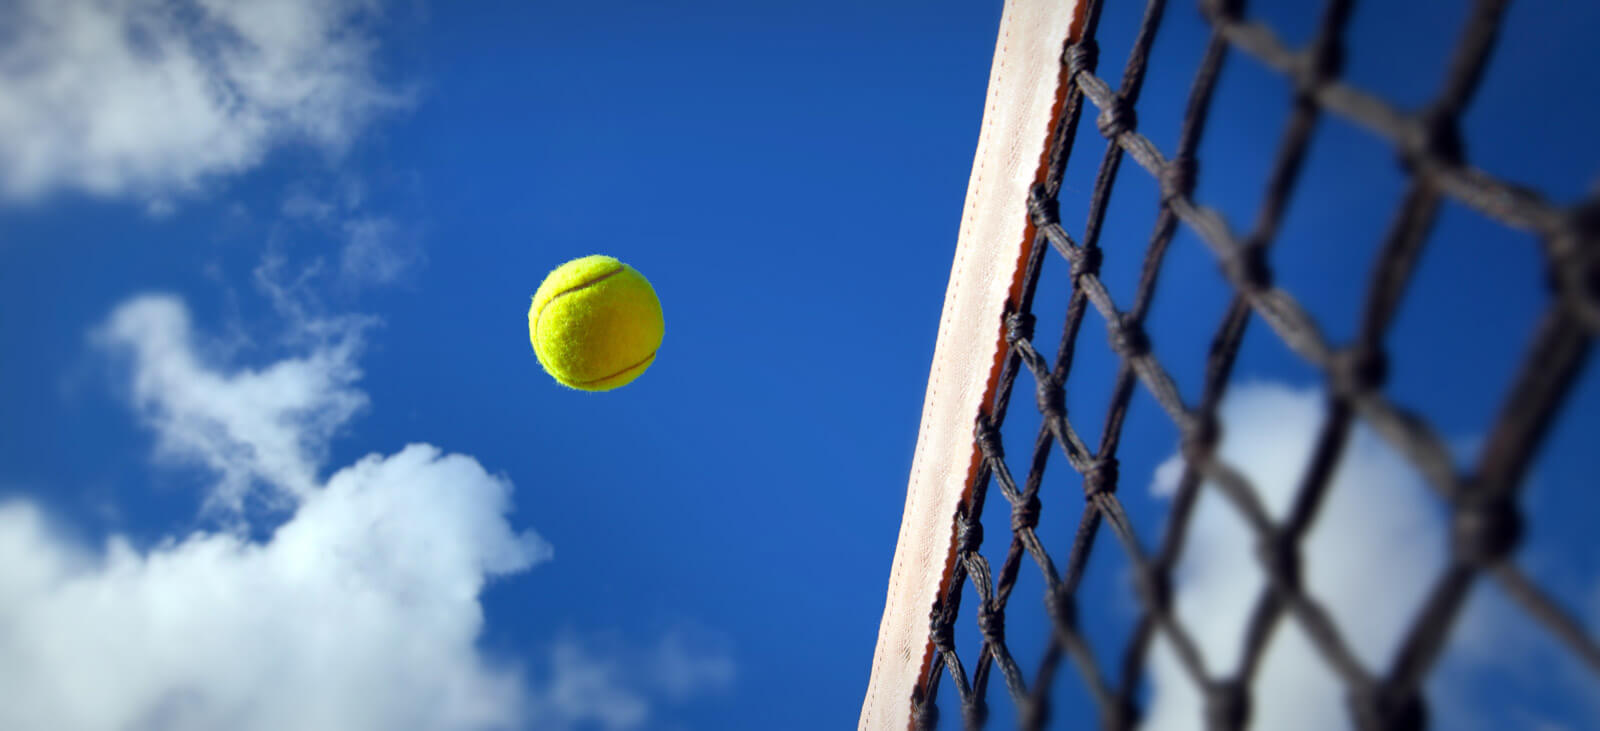 Tennis ball going over the net aginst blue sky